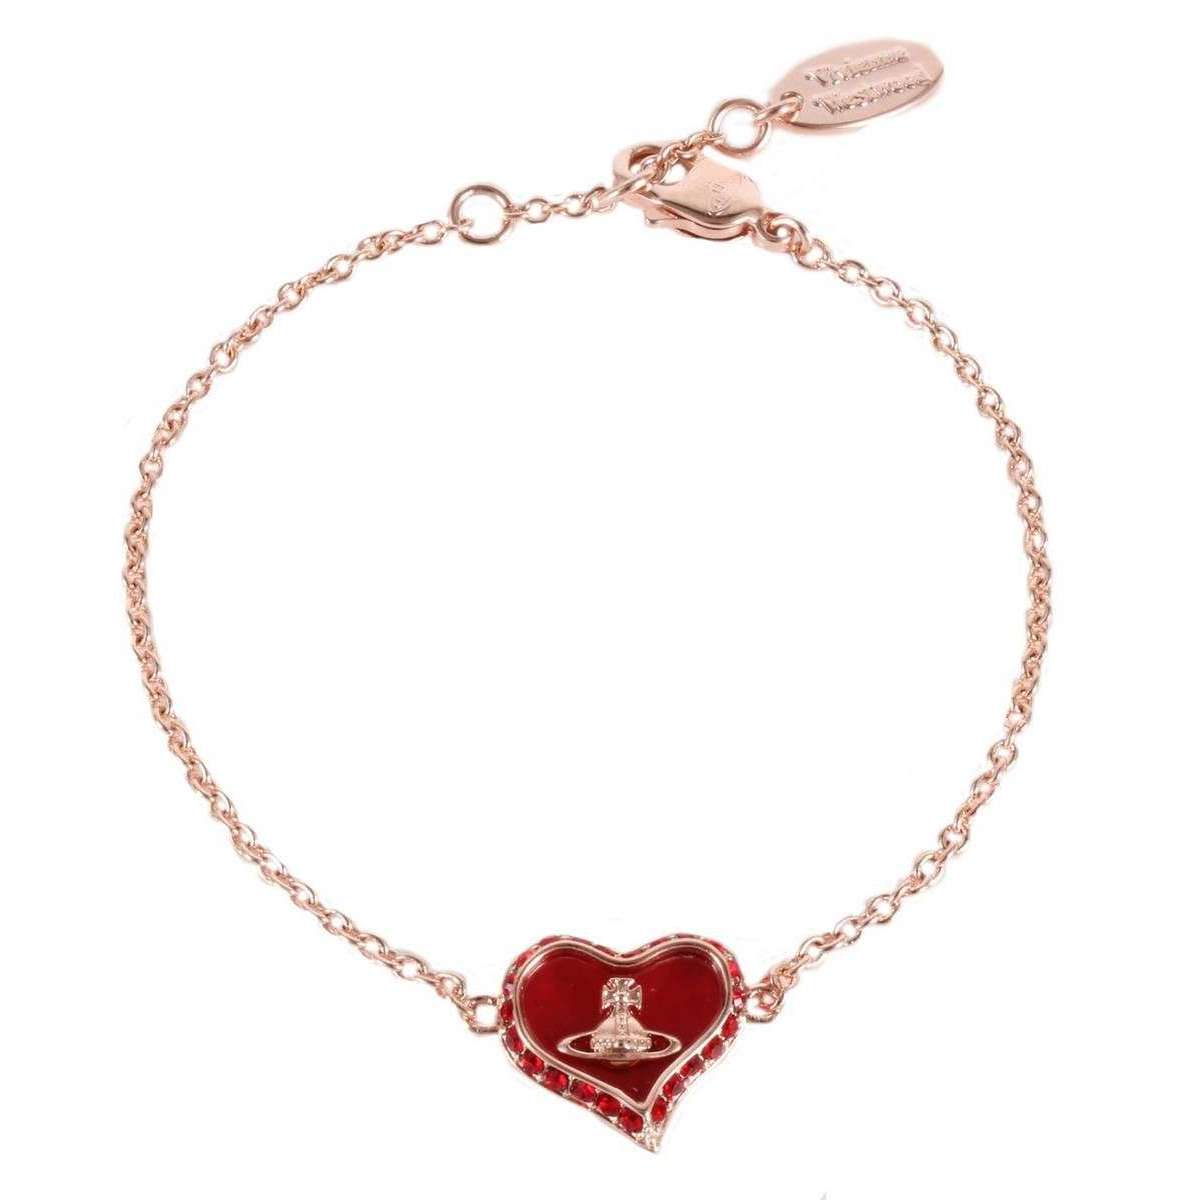 Vivienne Westwood Petra Heart Bracelet - Pink Gold/Light Siam/Flame Pearl